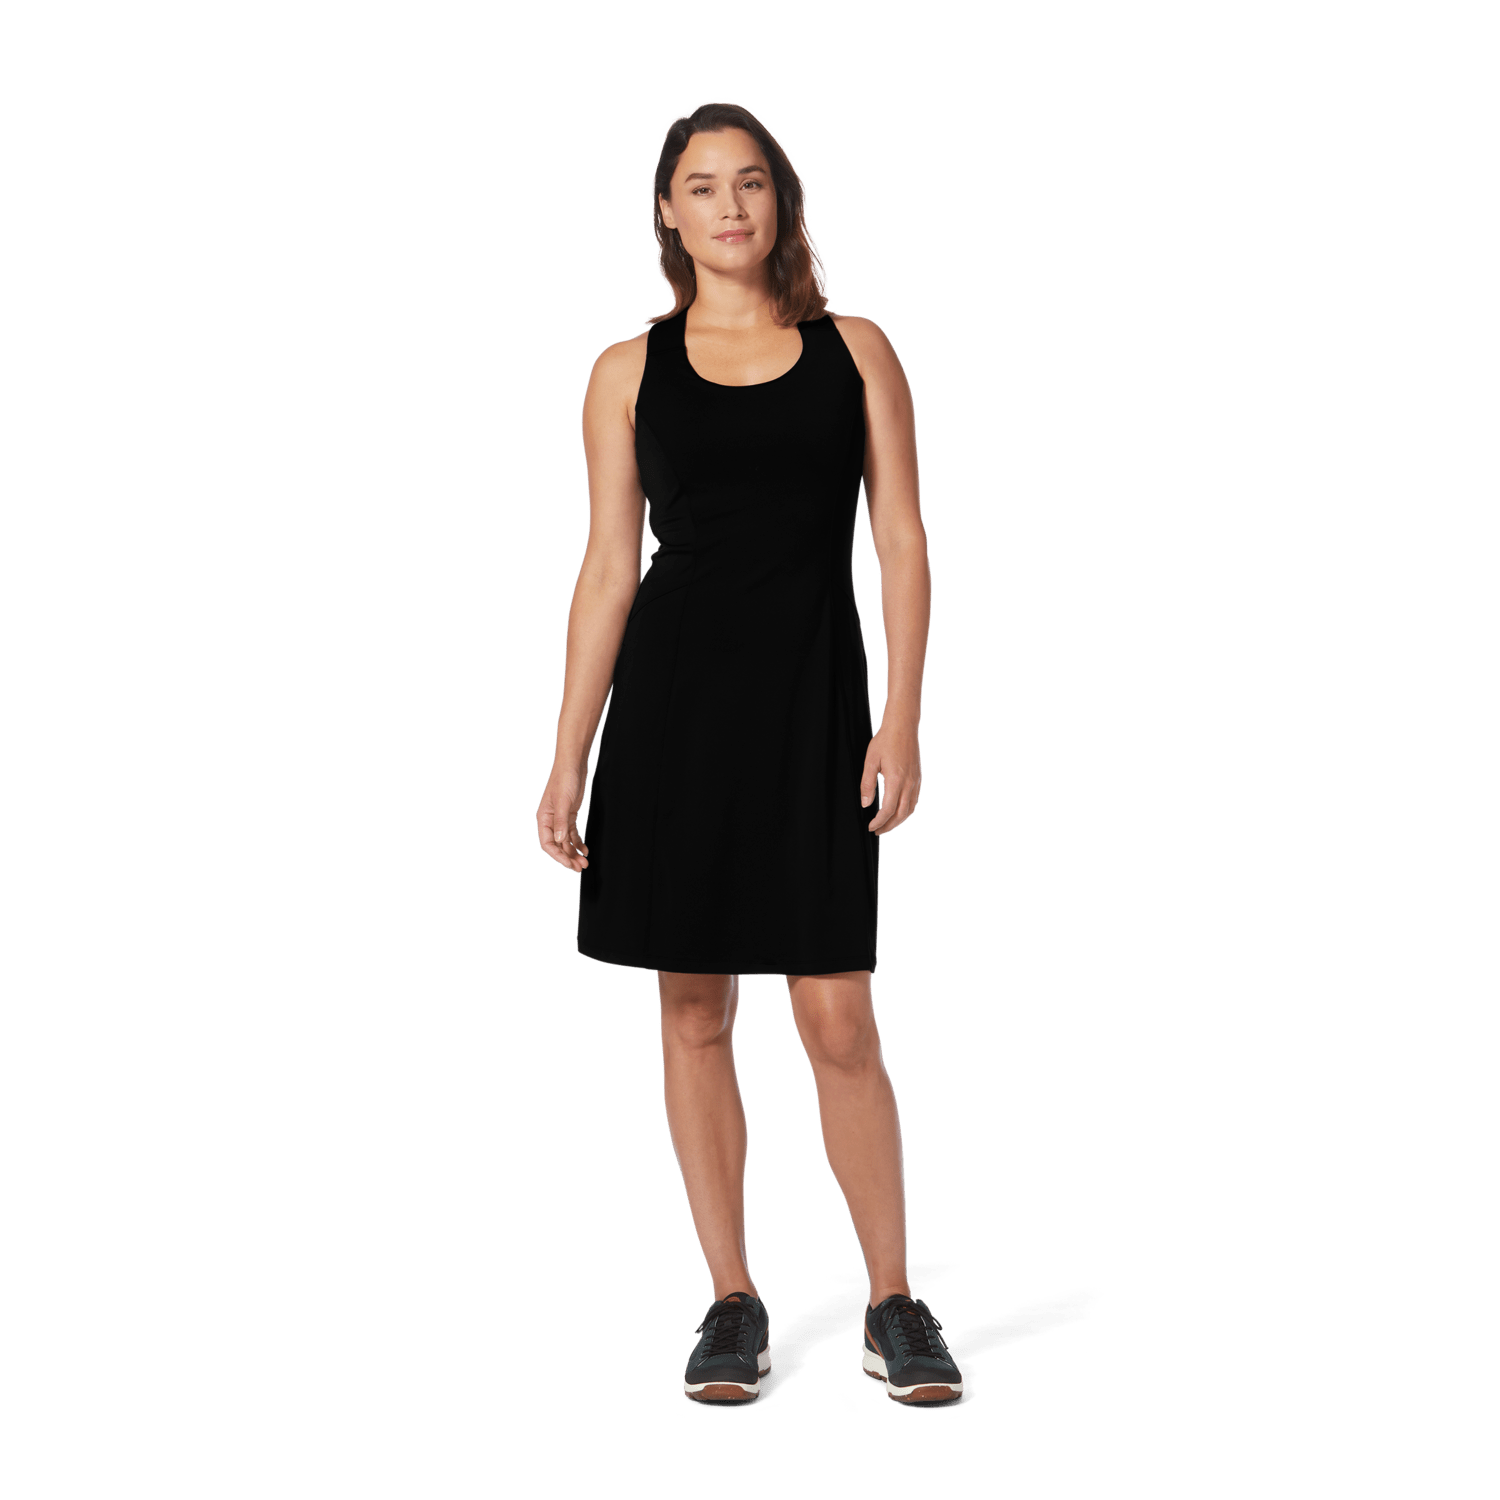 Royal Robbins W's Backcountry Pro Dress - Recycled polyester Jet Black Dress